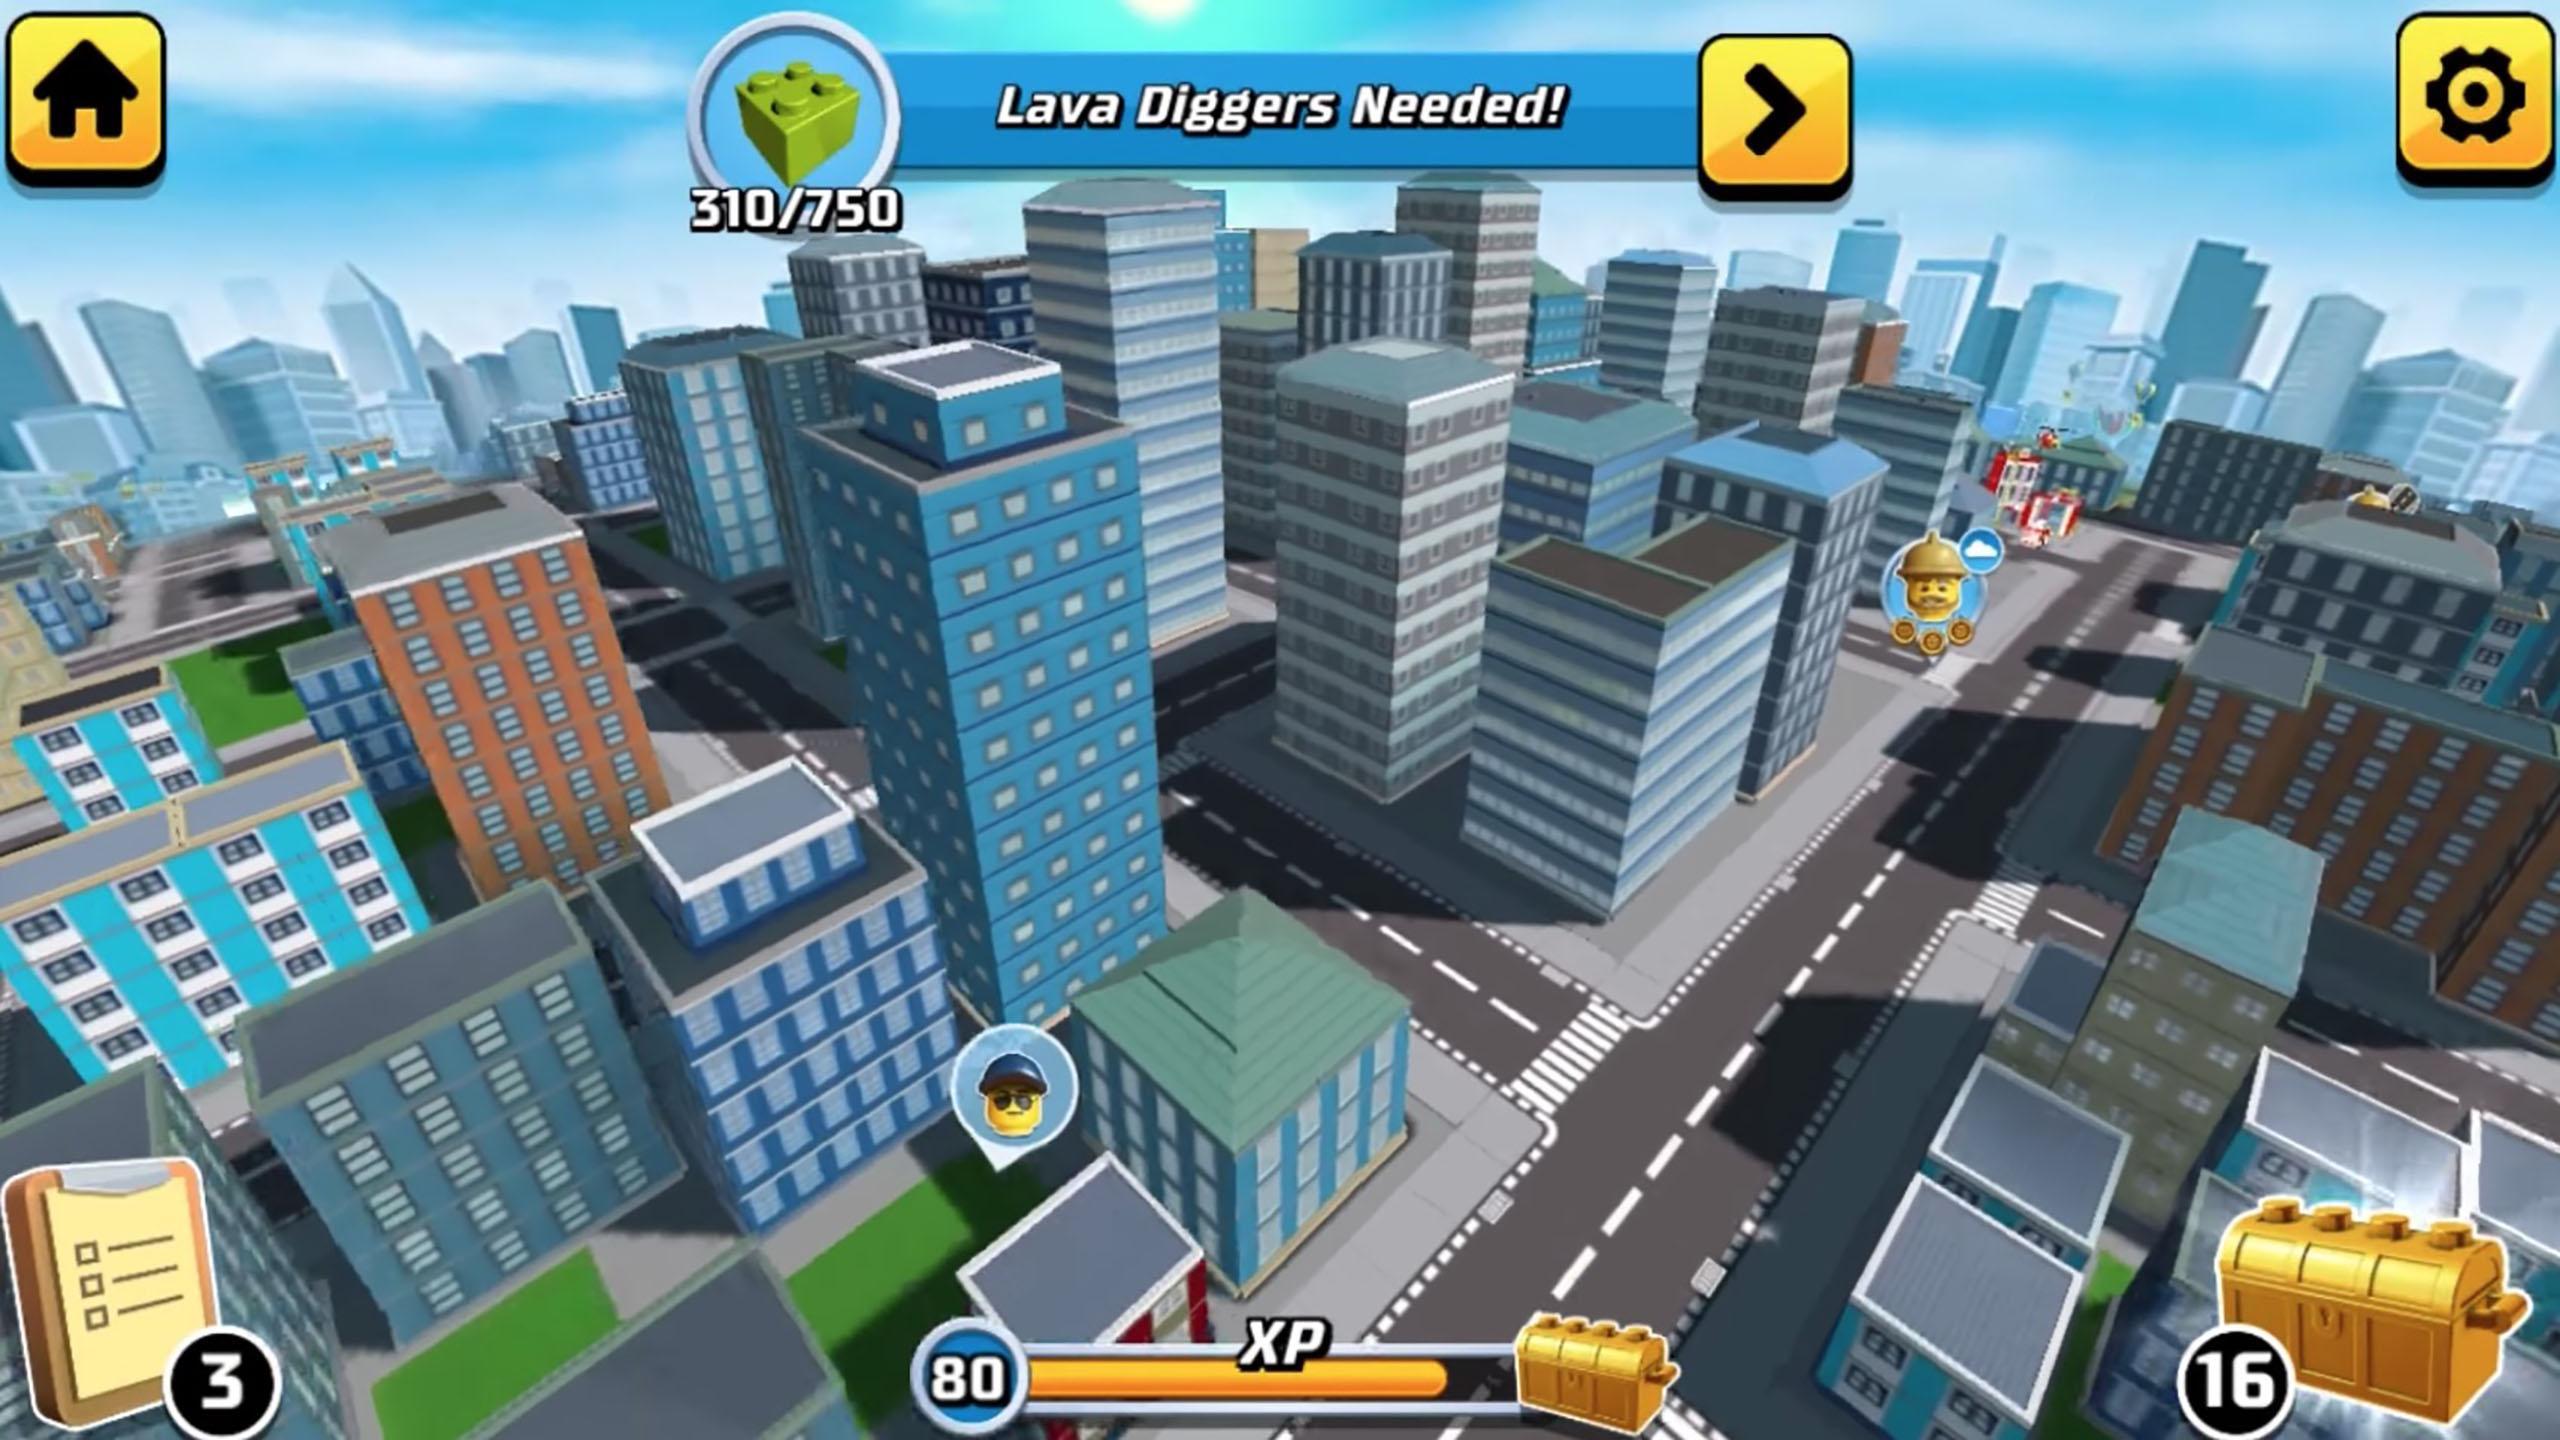 Nuceny Divocina Prozkoumat Lego My City 2 App Volby Zbyvajici Vychodni